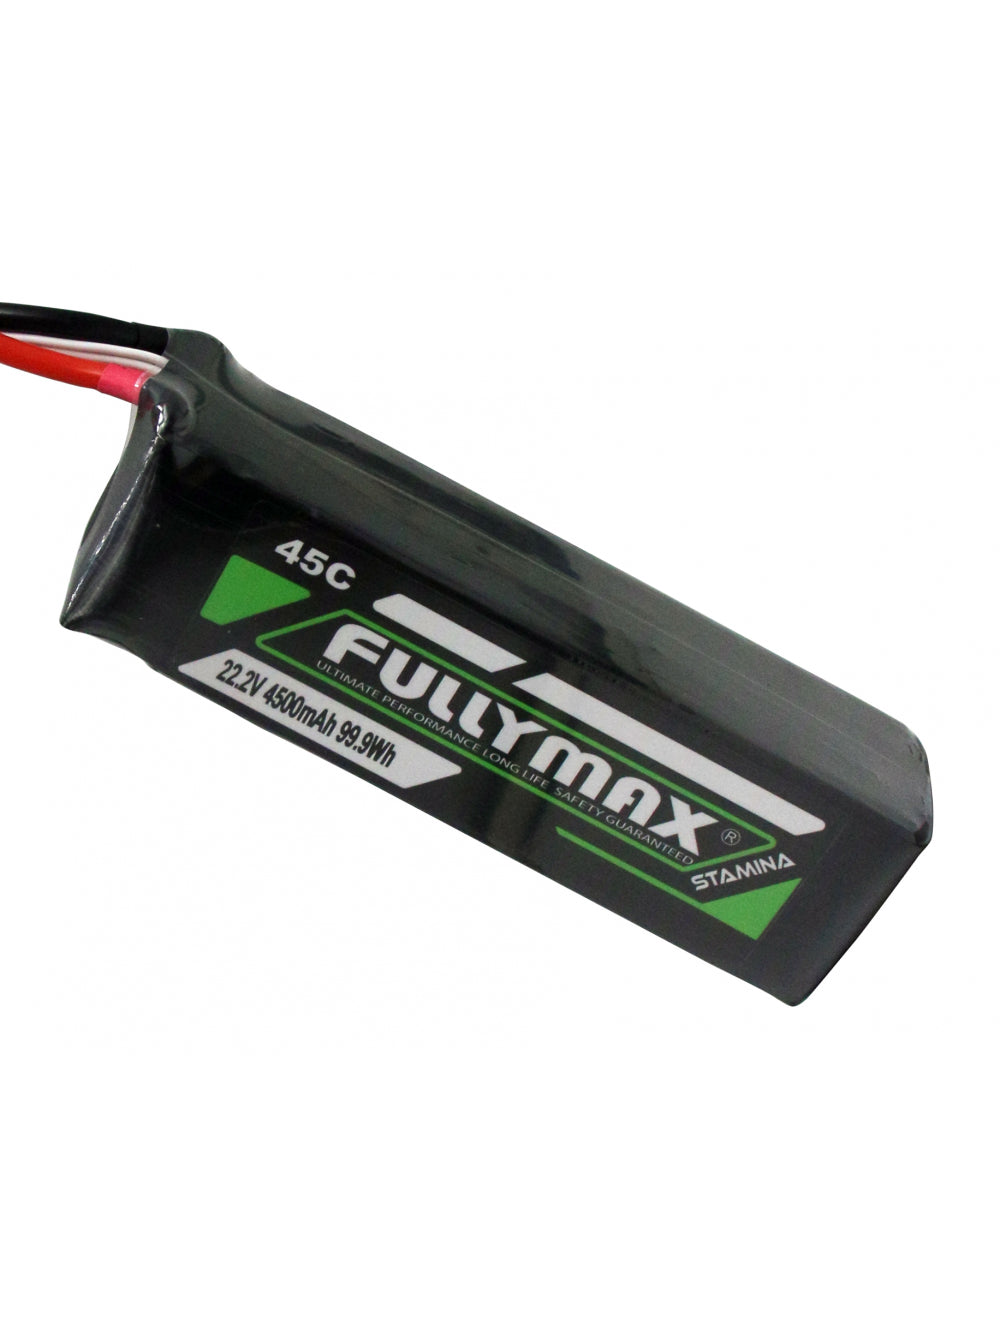 Overlander Fullymax 4500mAh 22.2V 6S 45C LiPo Battery - XT90 Connector 3446